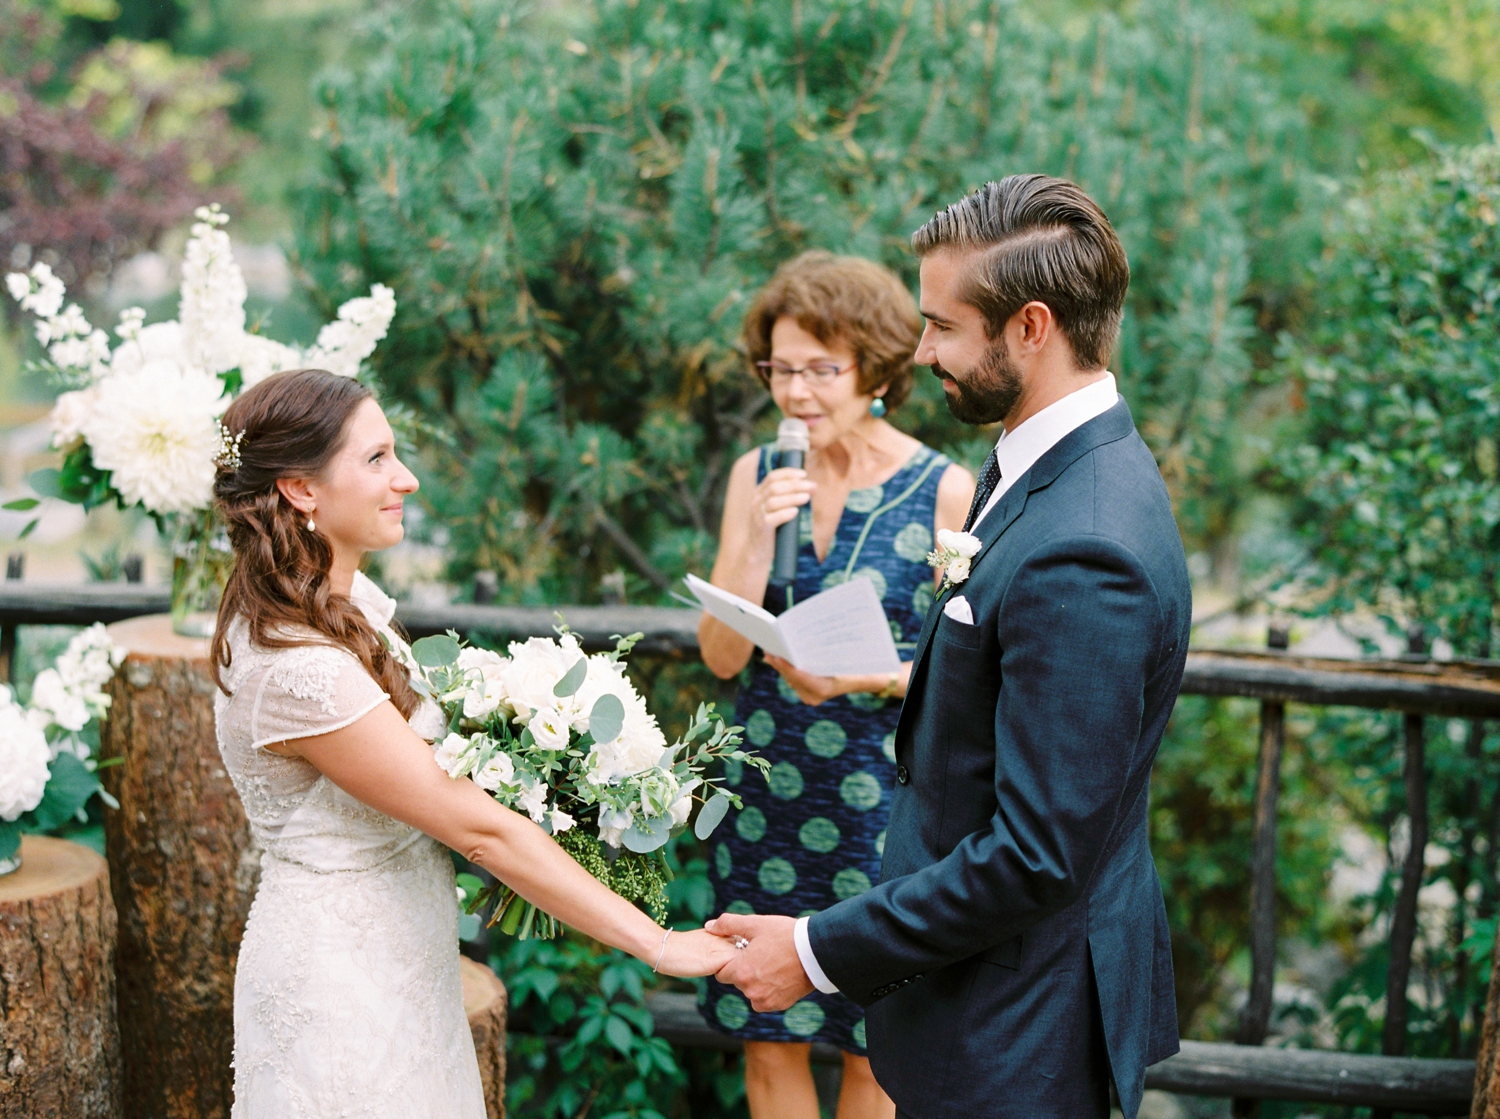 Calgary wedding photographers | fine art film | Justine Milton Photography | wedding inspiration | wedding chairs | wedding flowers | wedding ceremony | bride and groom | wedding vows